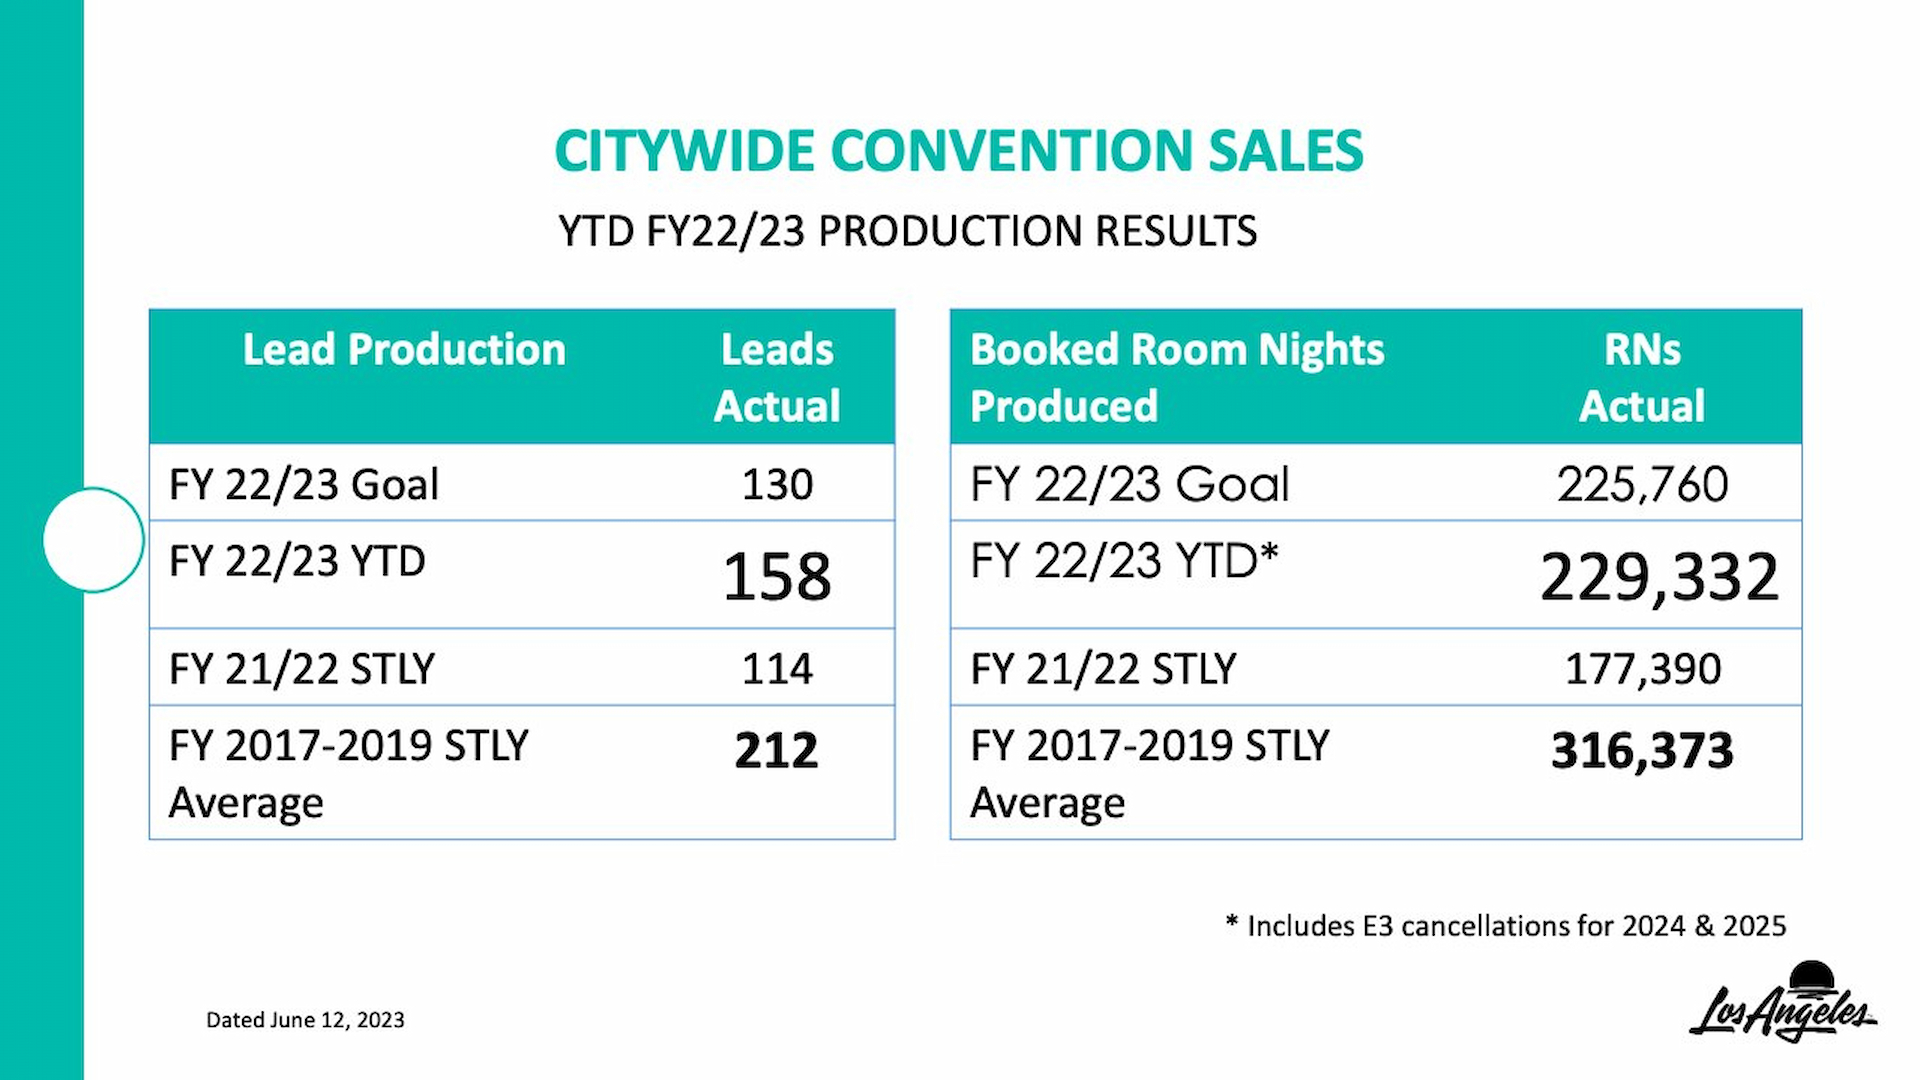 A table showing LA's citywide convention sales